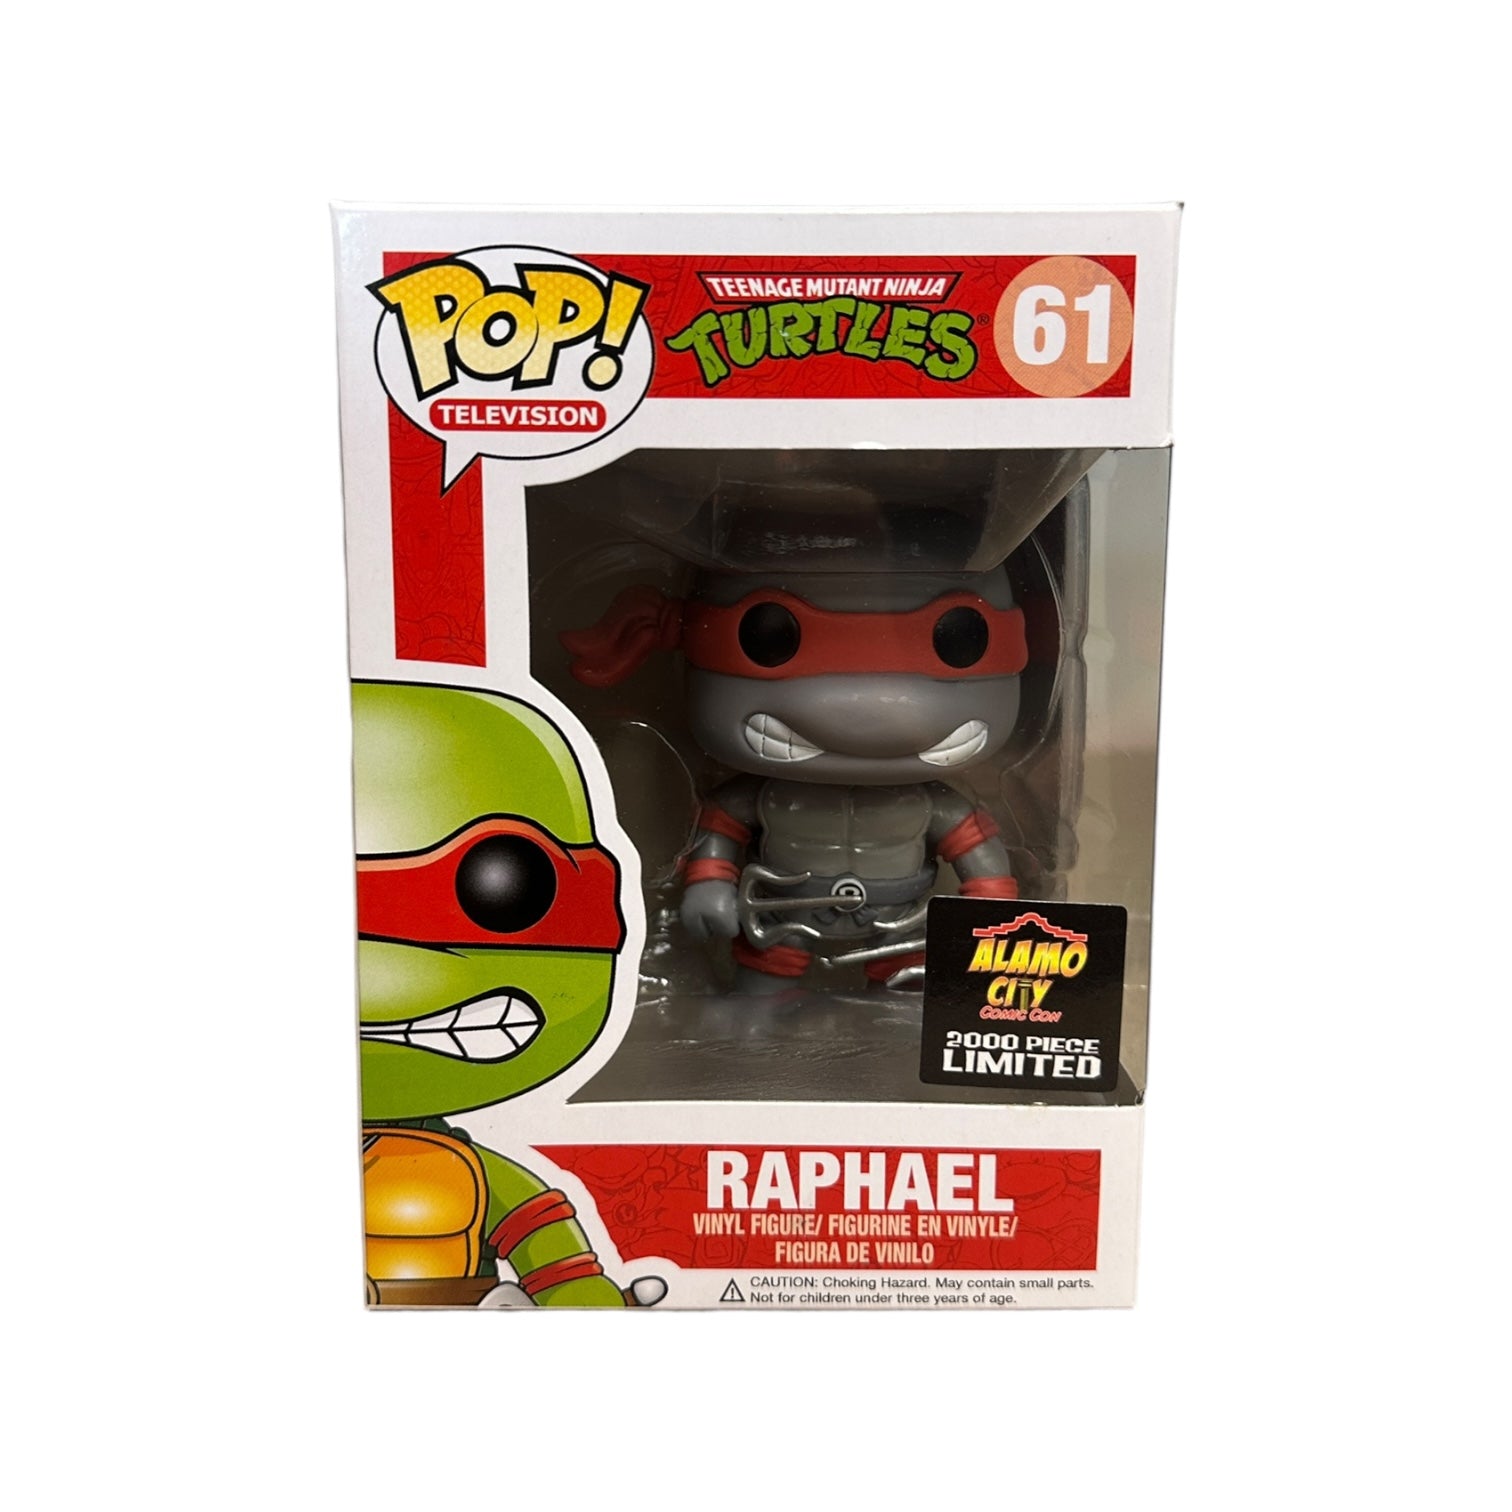 Raphael #61 (Grayscale) Funko Pop! - Teenage Mutant Ninja Turtles - Alamo City Comic Con 2013 Exclusive LE2000 Pcs - Condition 8.5/10